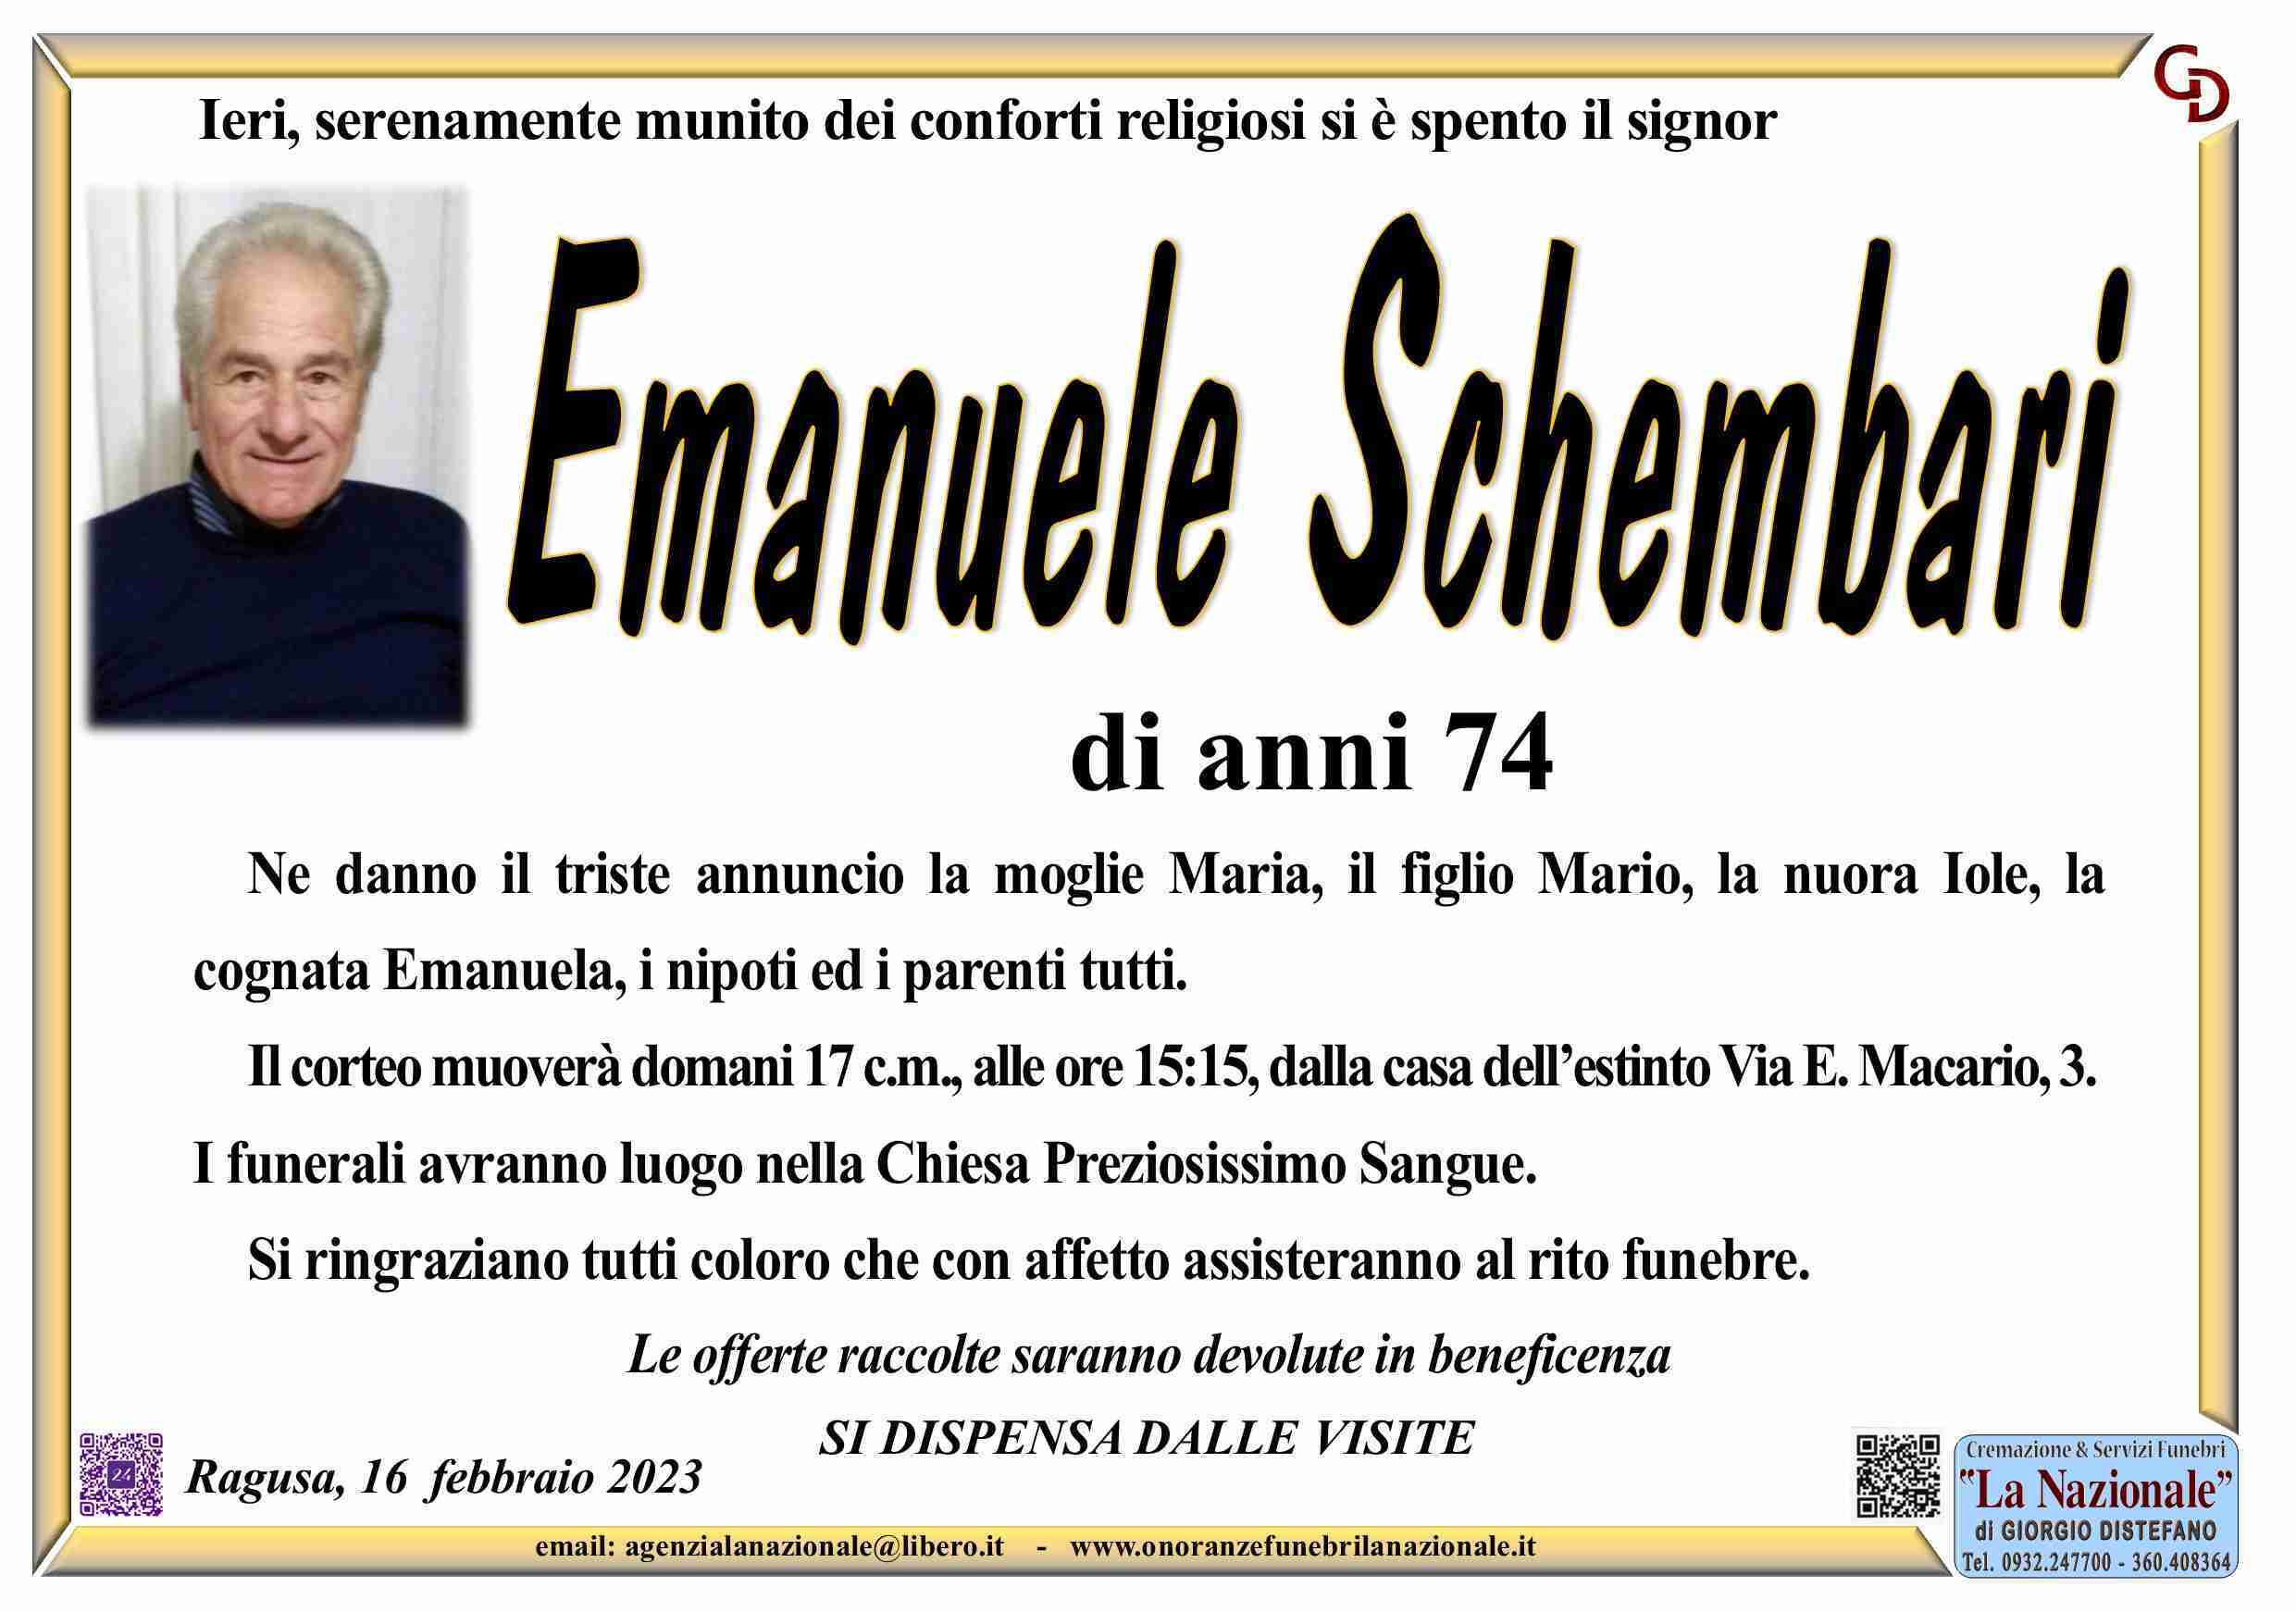 Emanuele Schembari